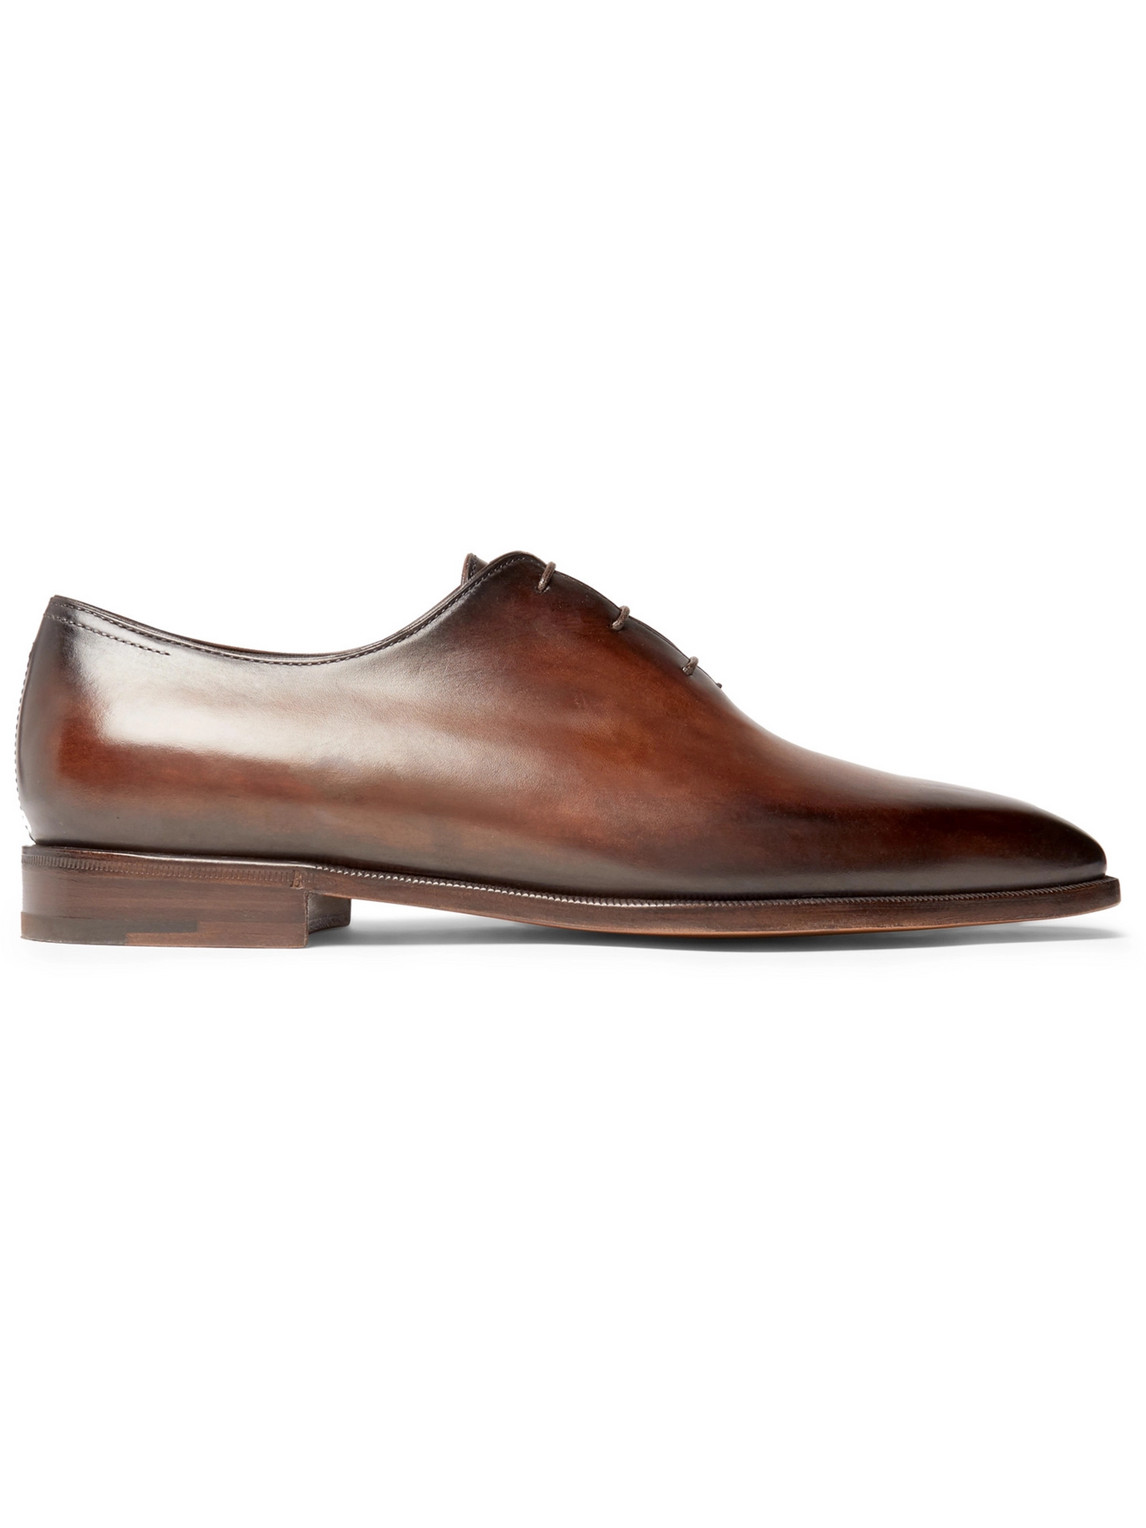 Berluti - Blake Whole-Cut Venezia Leather Oxford Shoes - Men - Brown - UK 7.5 von Berluti